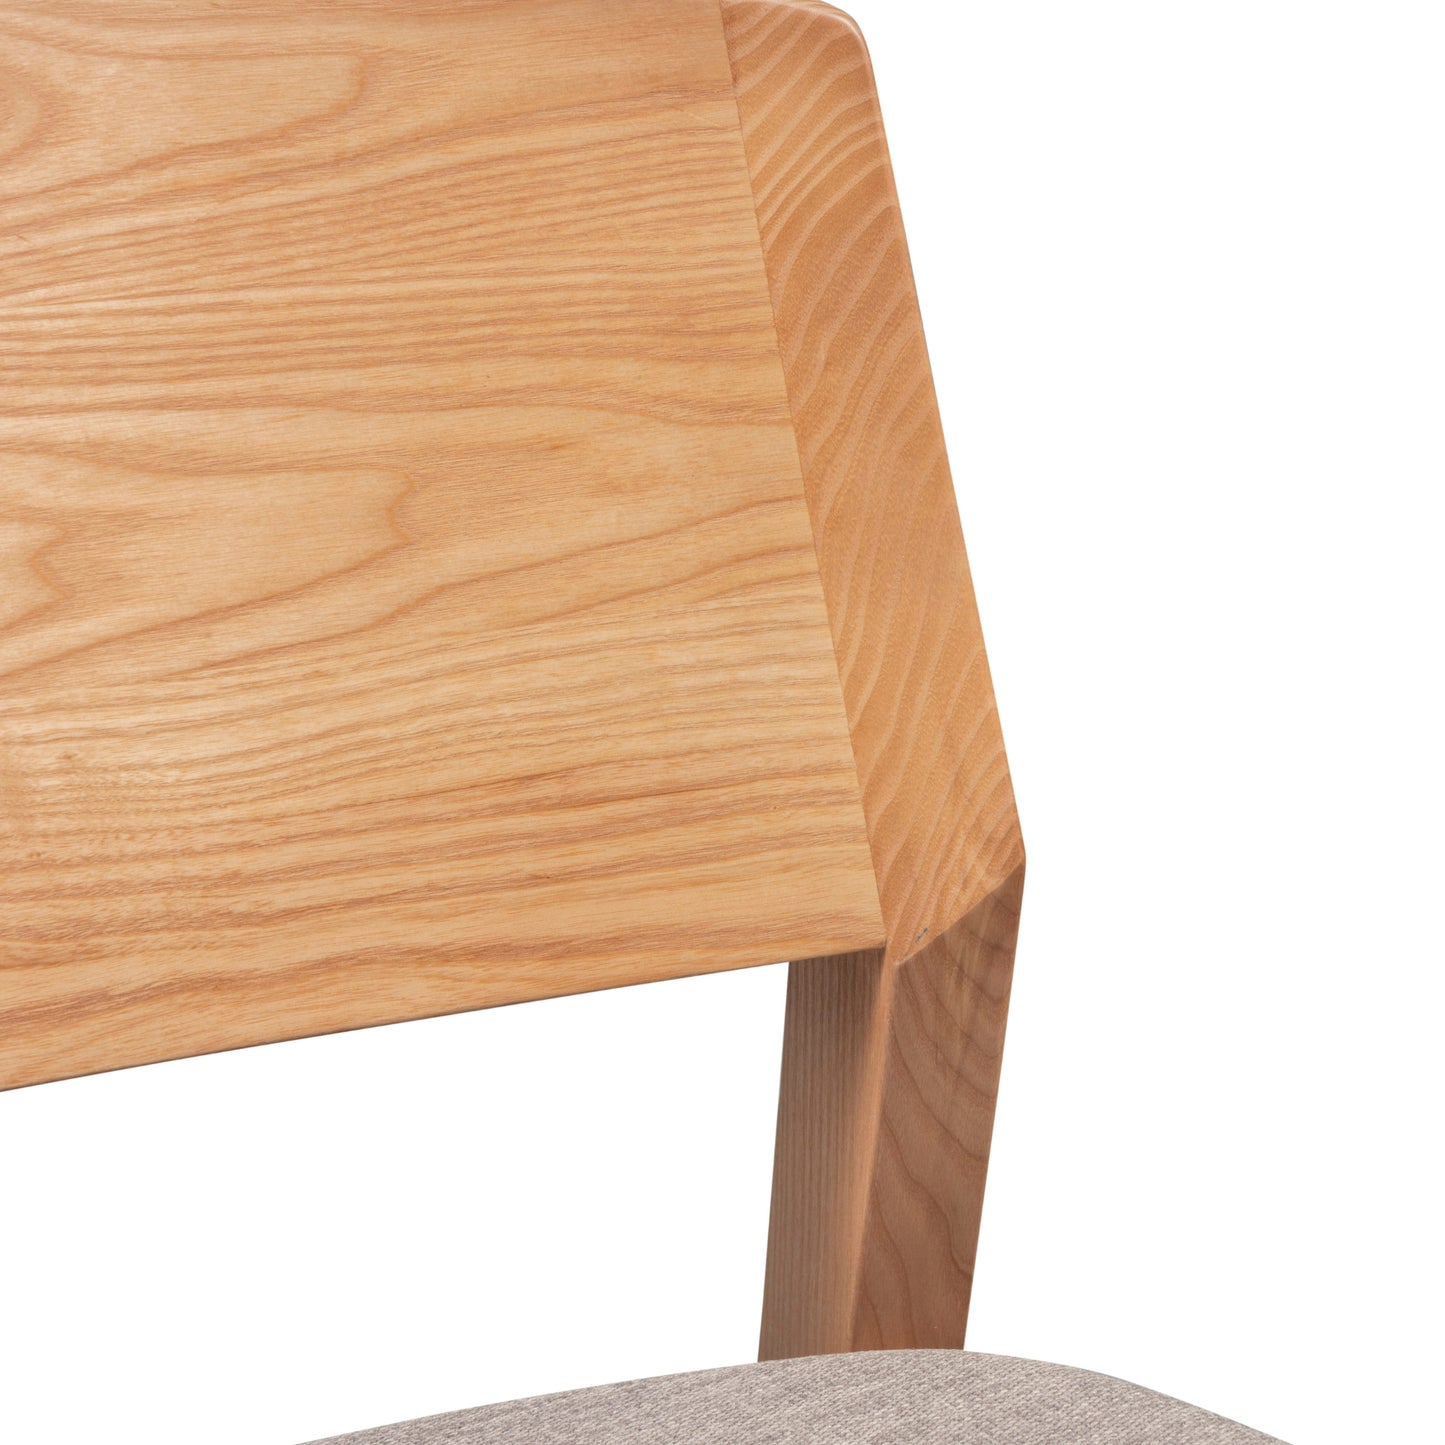 Emilio 8pc Set Dining Chair Fabric Seat Scandinavian Style Solid Ash Wood Oak